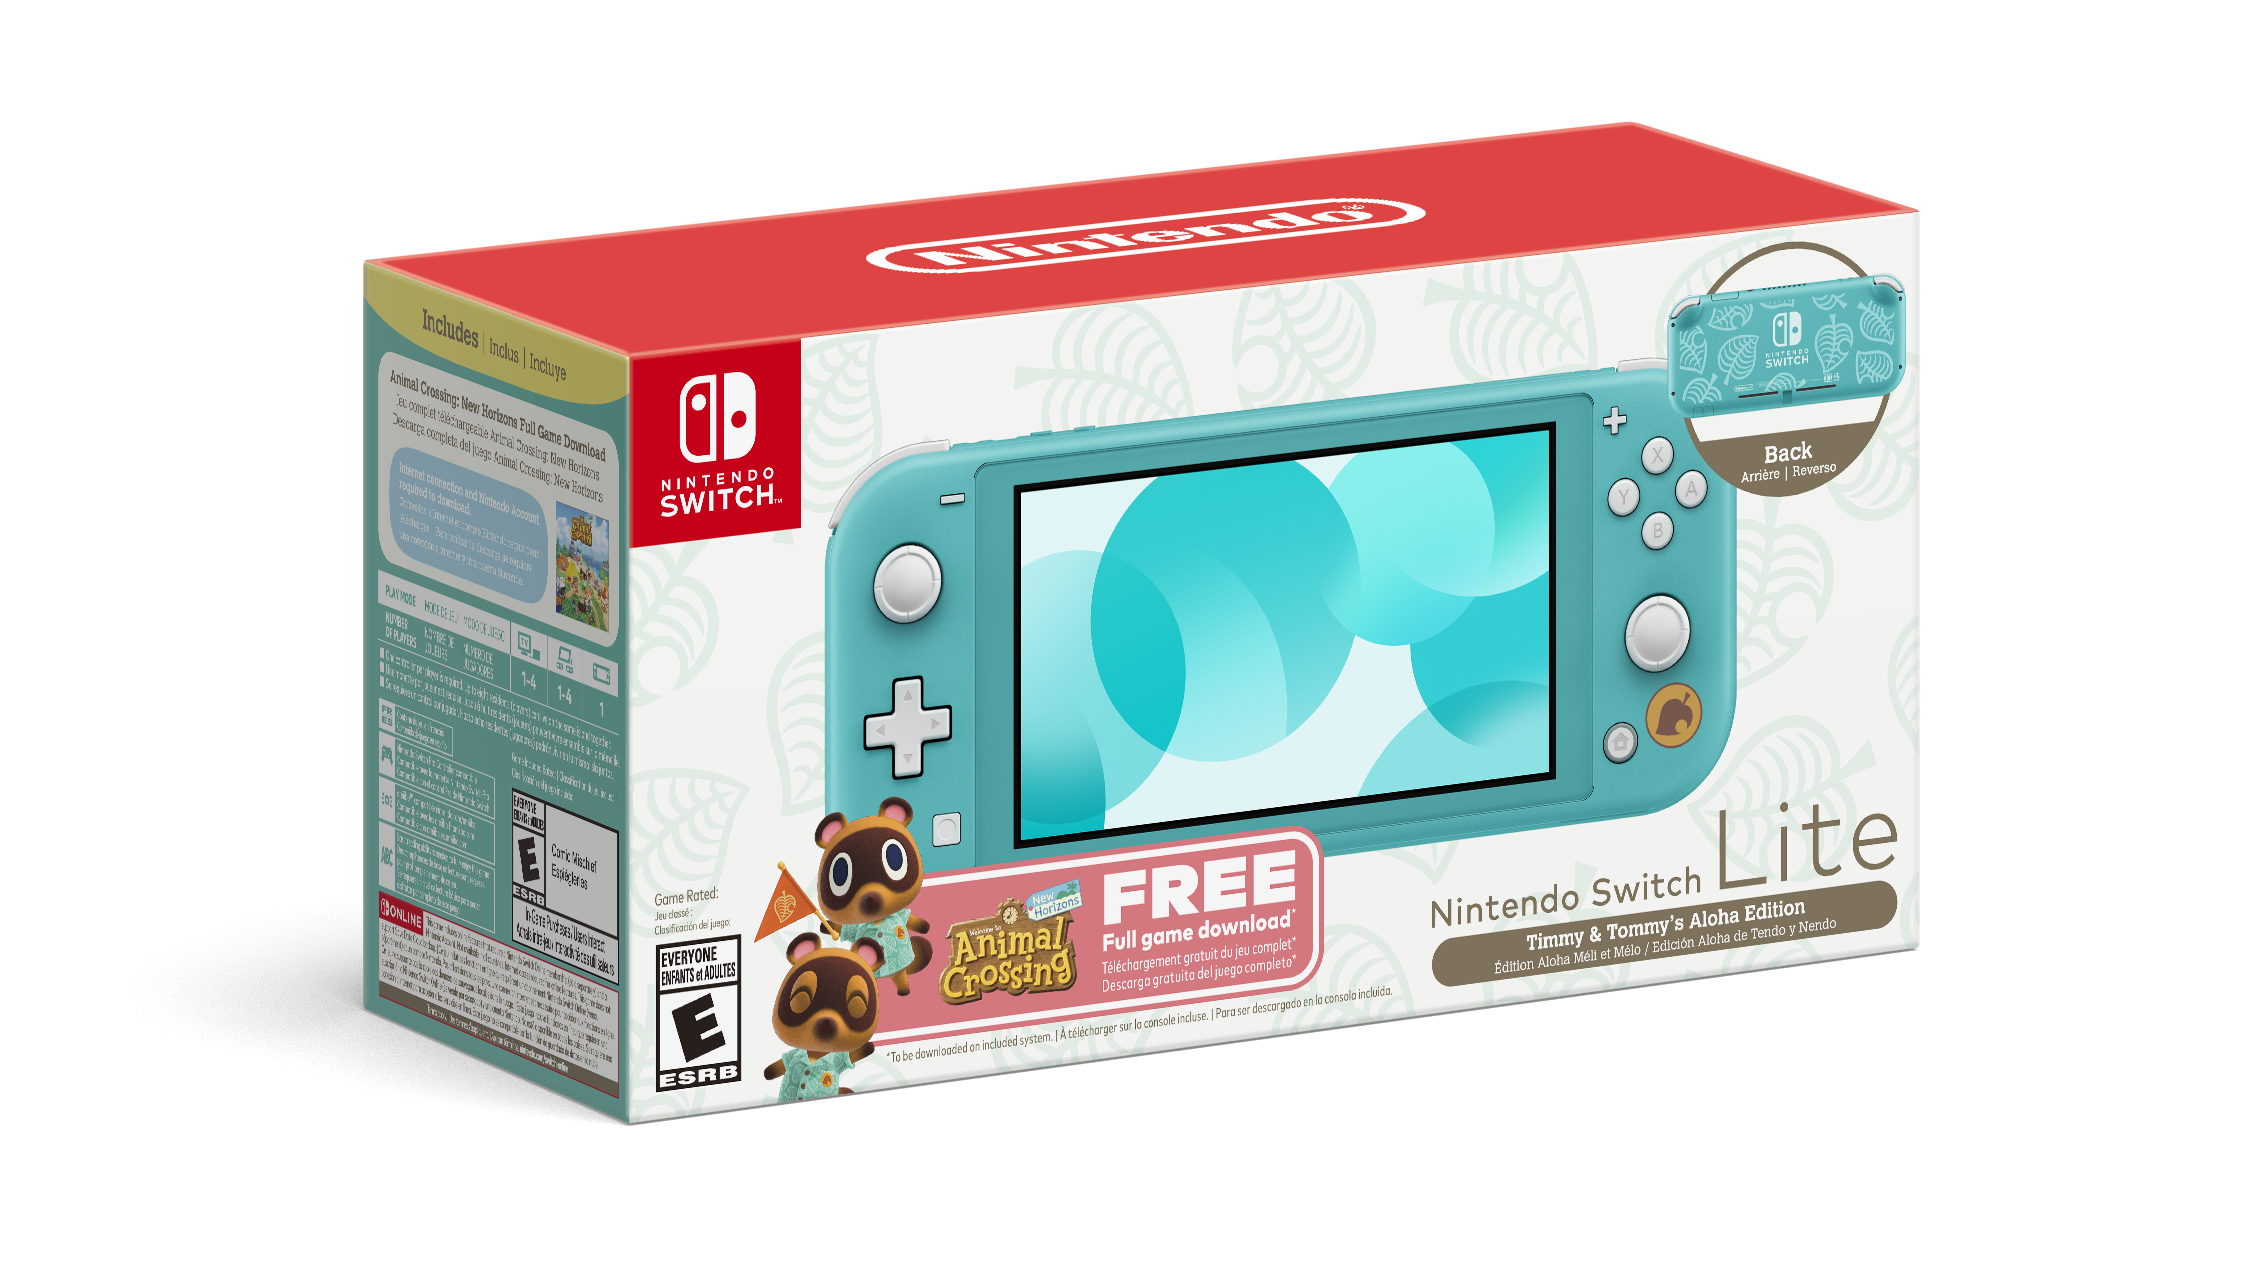 Nintendo Switch Lite (Timmy & Tommy’s Aloha Edition) Animal Crossing: New Horizons Bundle | Image: Nintendo